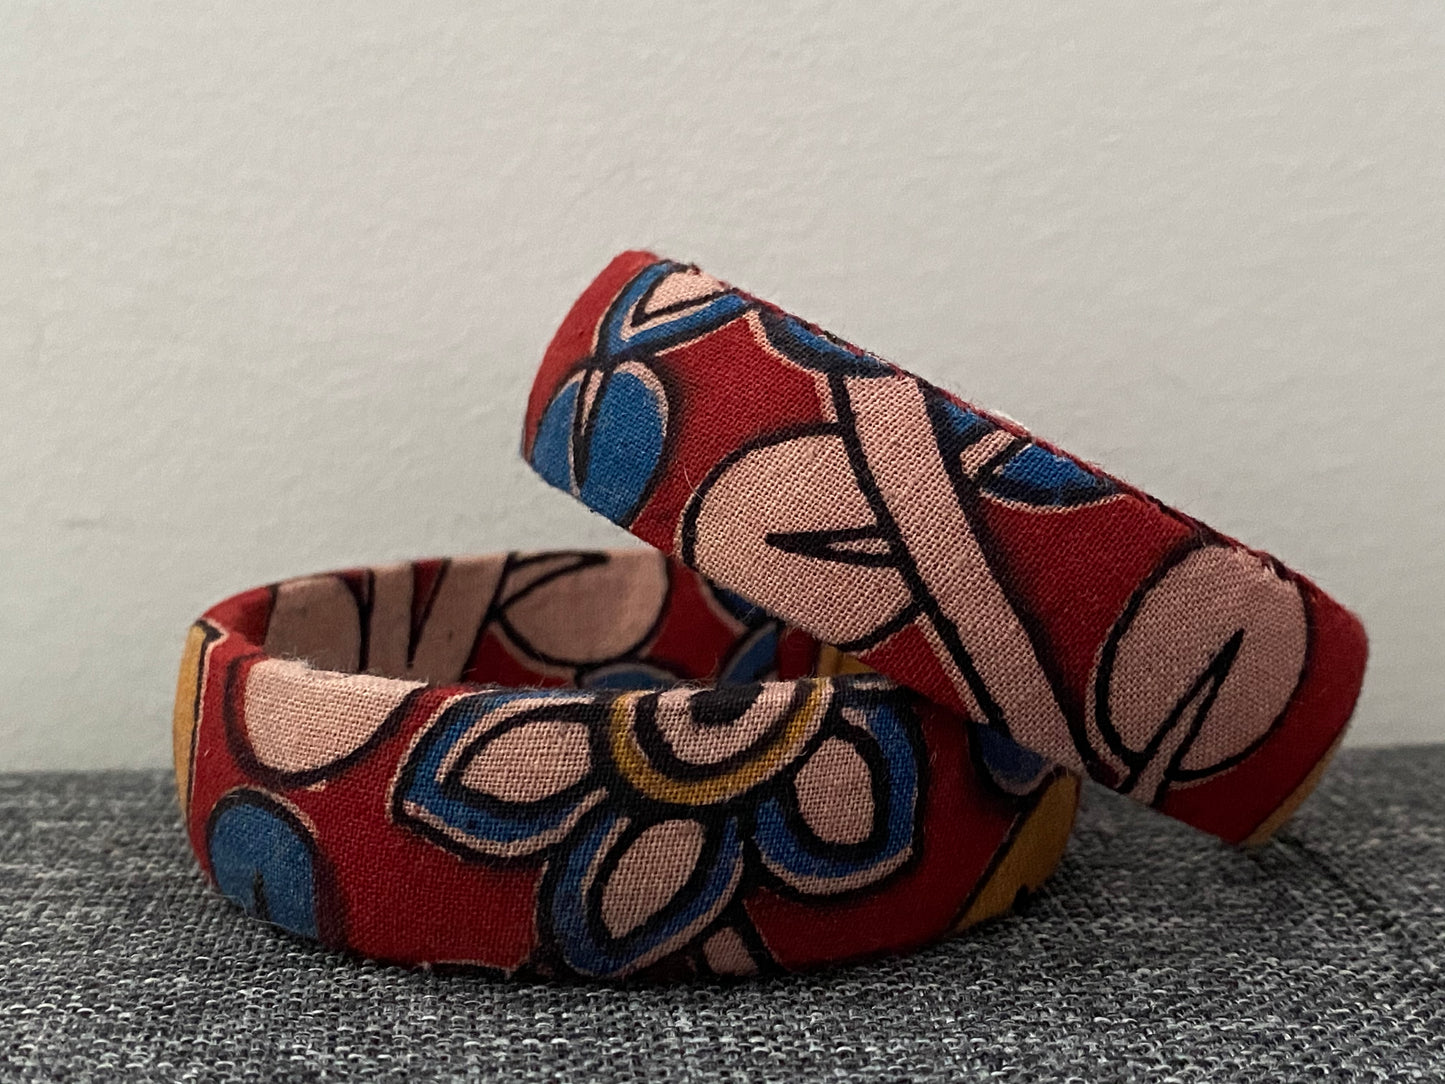 Indian Fabric Print Bracelets (Rounded Edge)